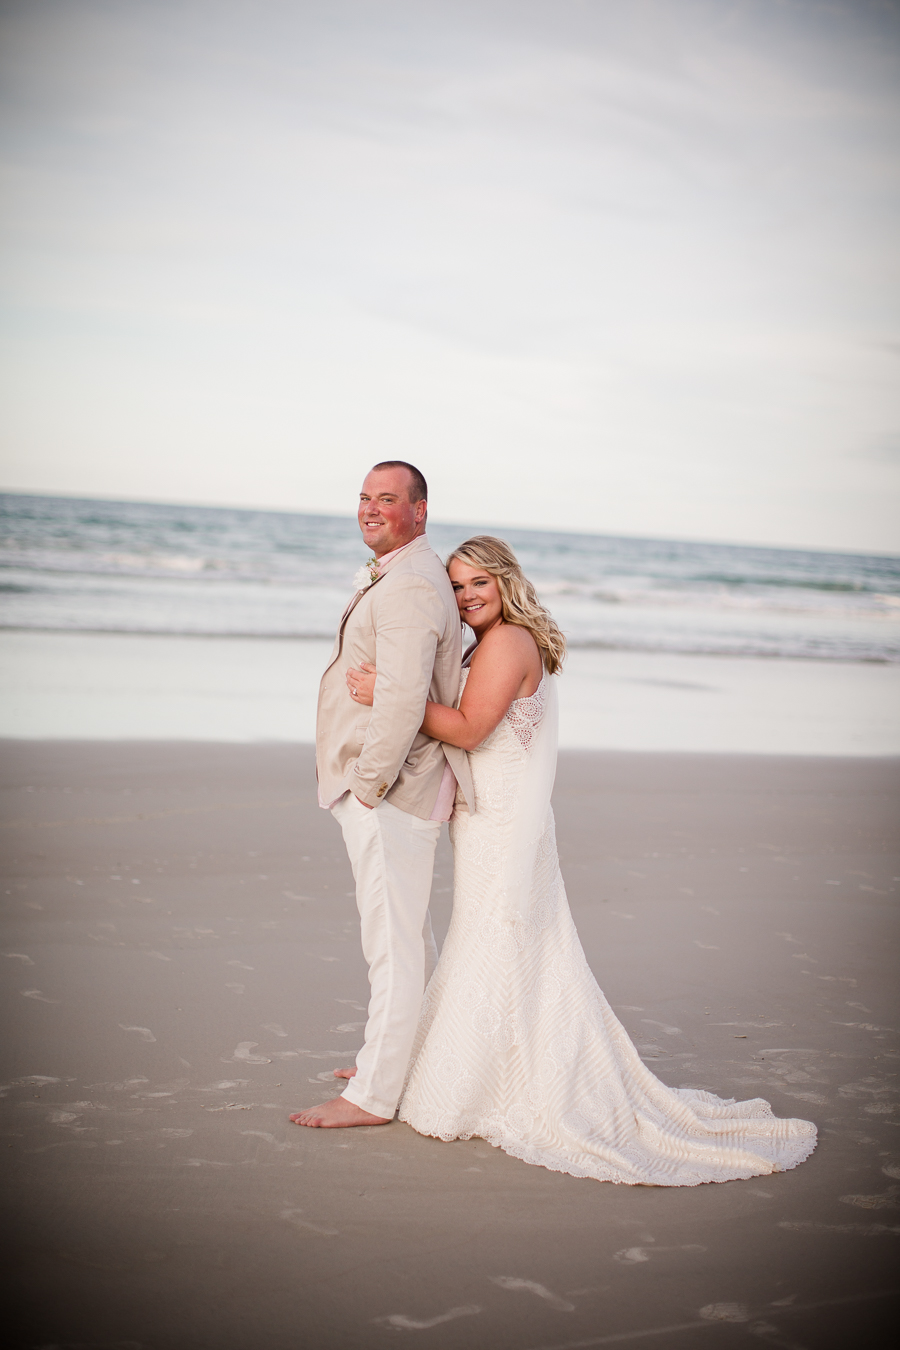 Hugging Groom from behind at this Daytona Beach Wedding by Destination Wedding Photographer, Amanda May Photos.